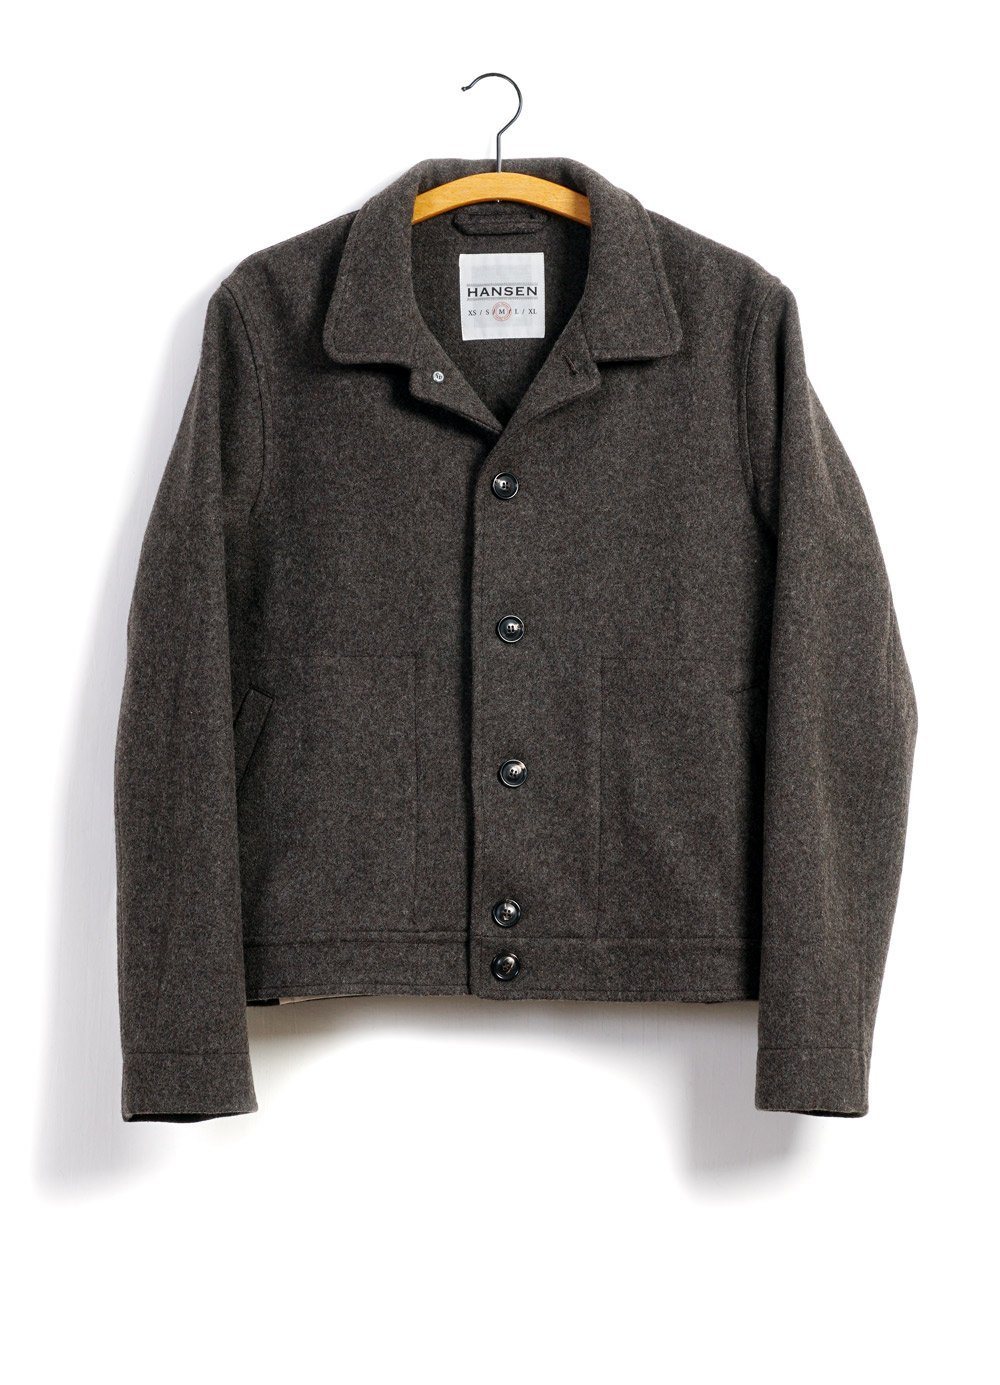 HANSEN Garments - ATLAS | Short Wool Felt Jacket | Brown - HANSEN Garments